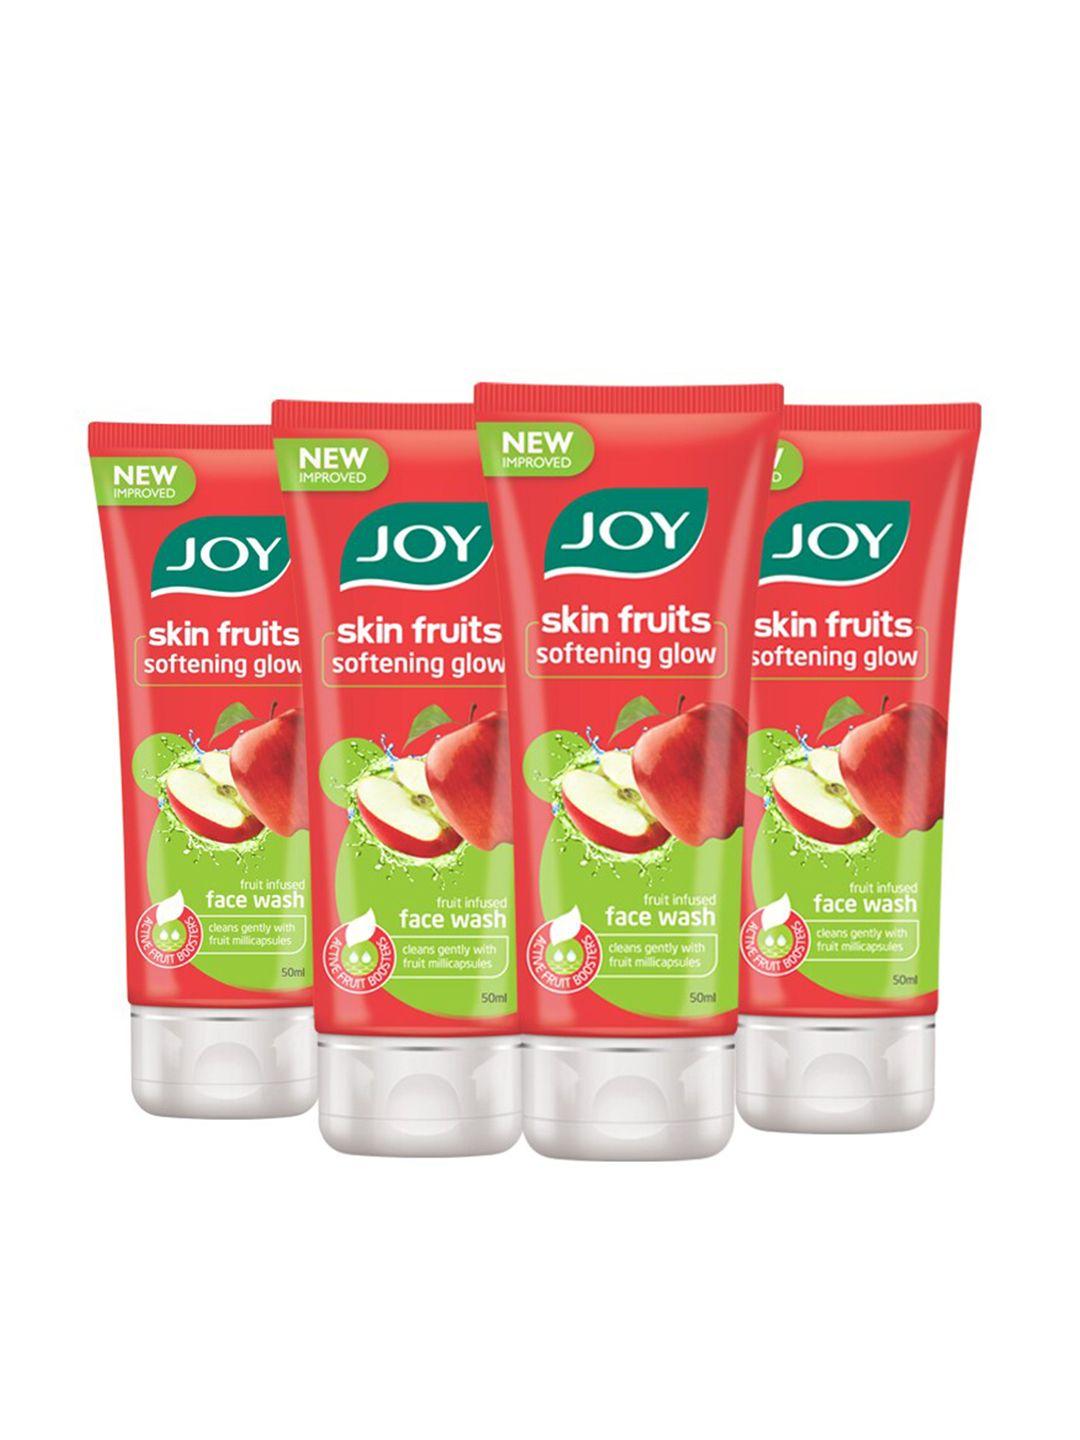 joy set of 4 skin fruits softening glow apple face wash - 50ml each